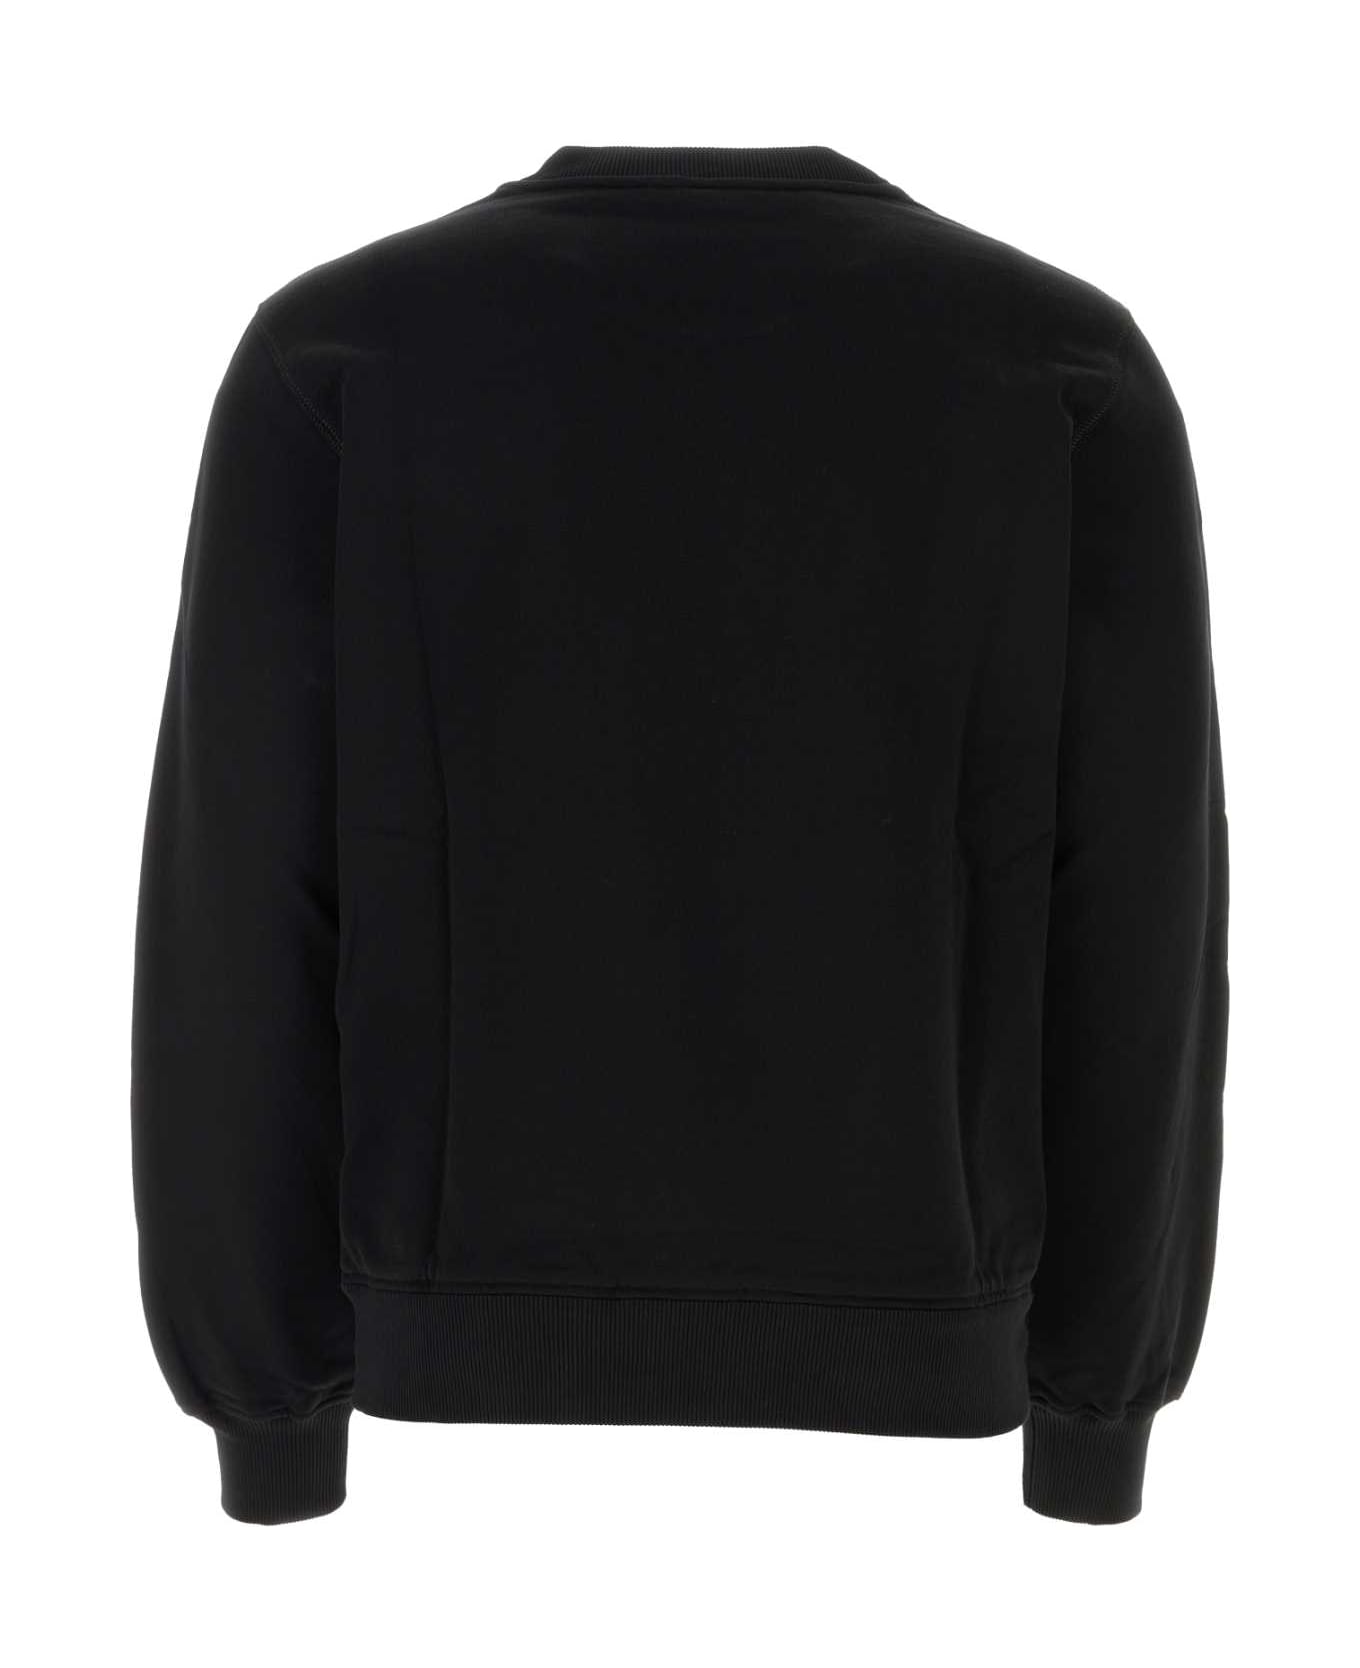 Dolce & Gabbana Black Cotton Sweatshirt - N0000 フリース